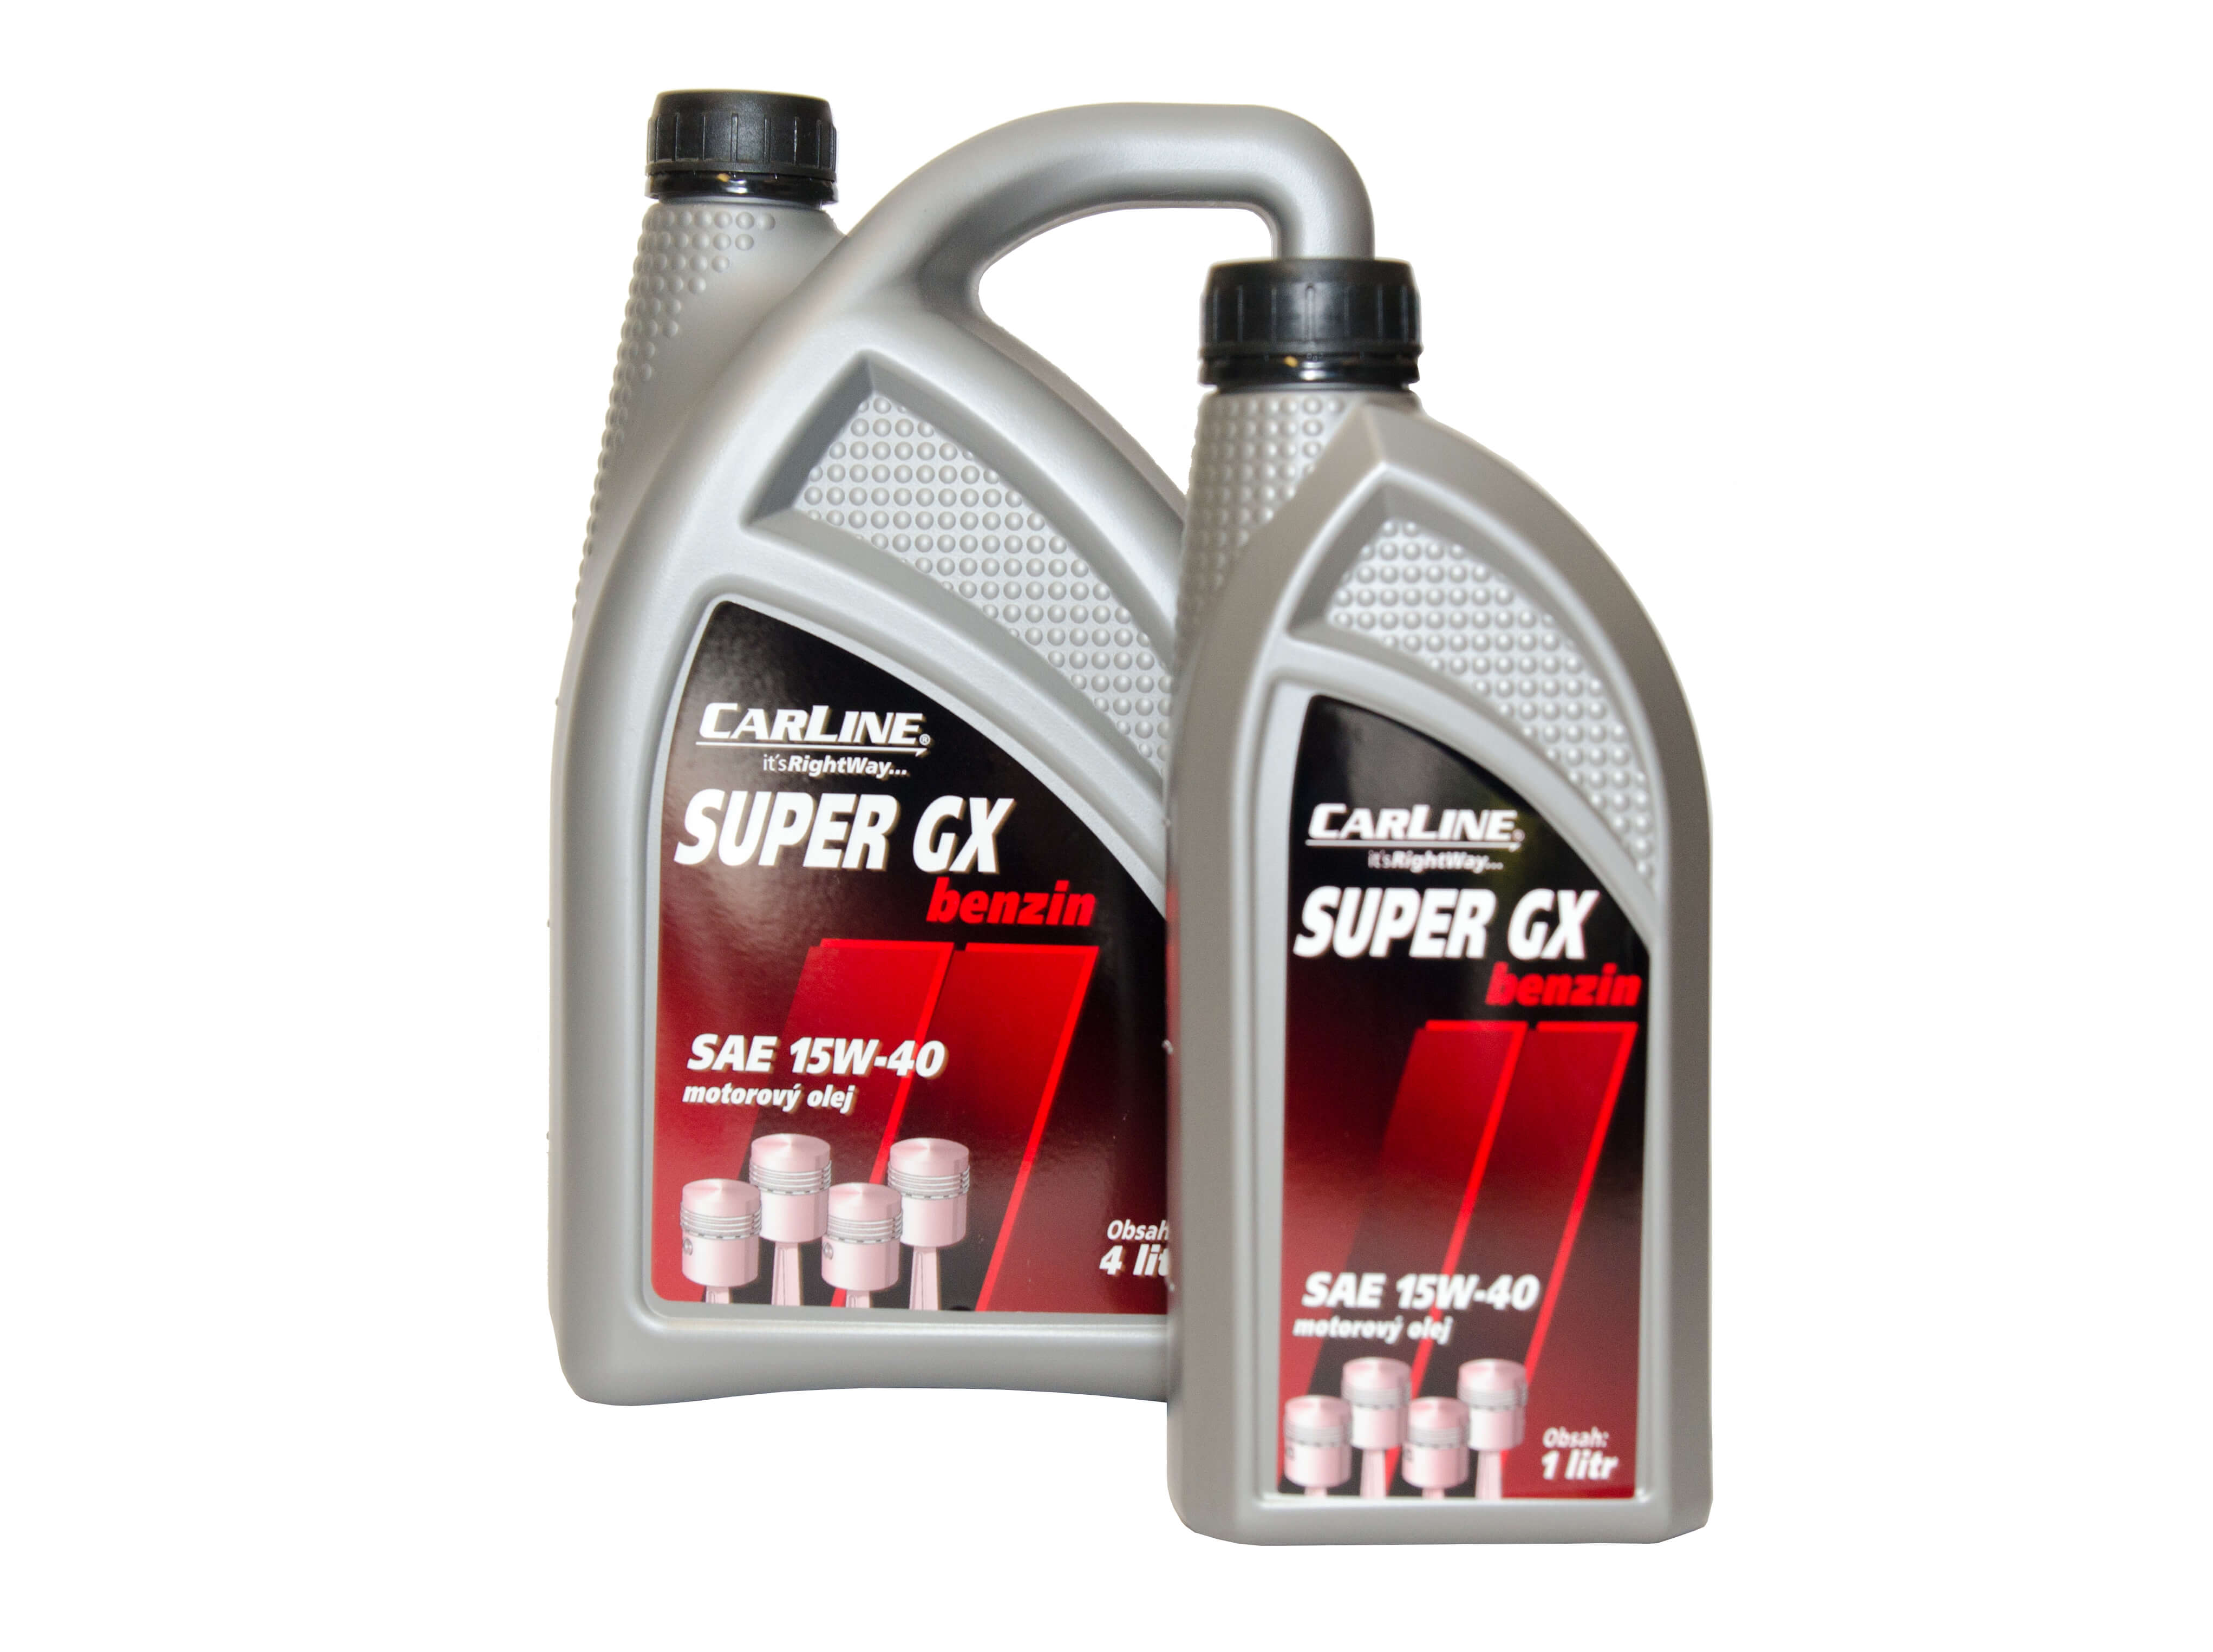 CARLINE® Super GX benzin 15W-40 Objem: 180 kg